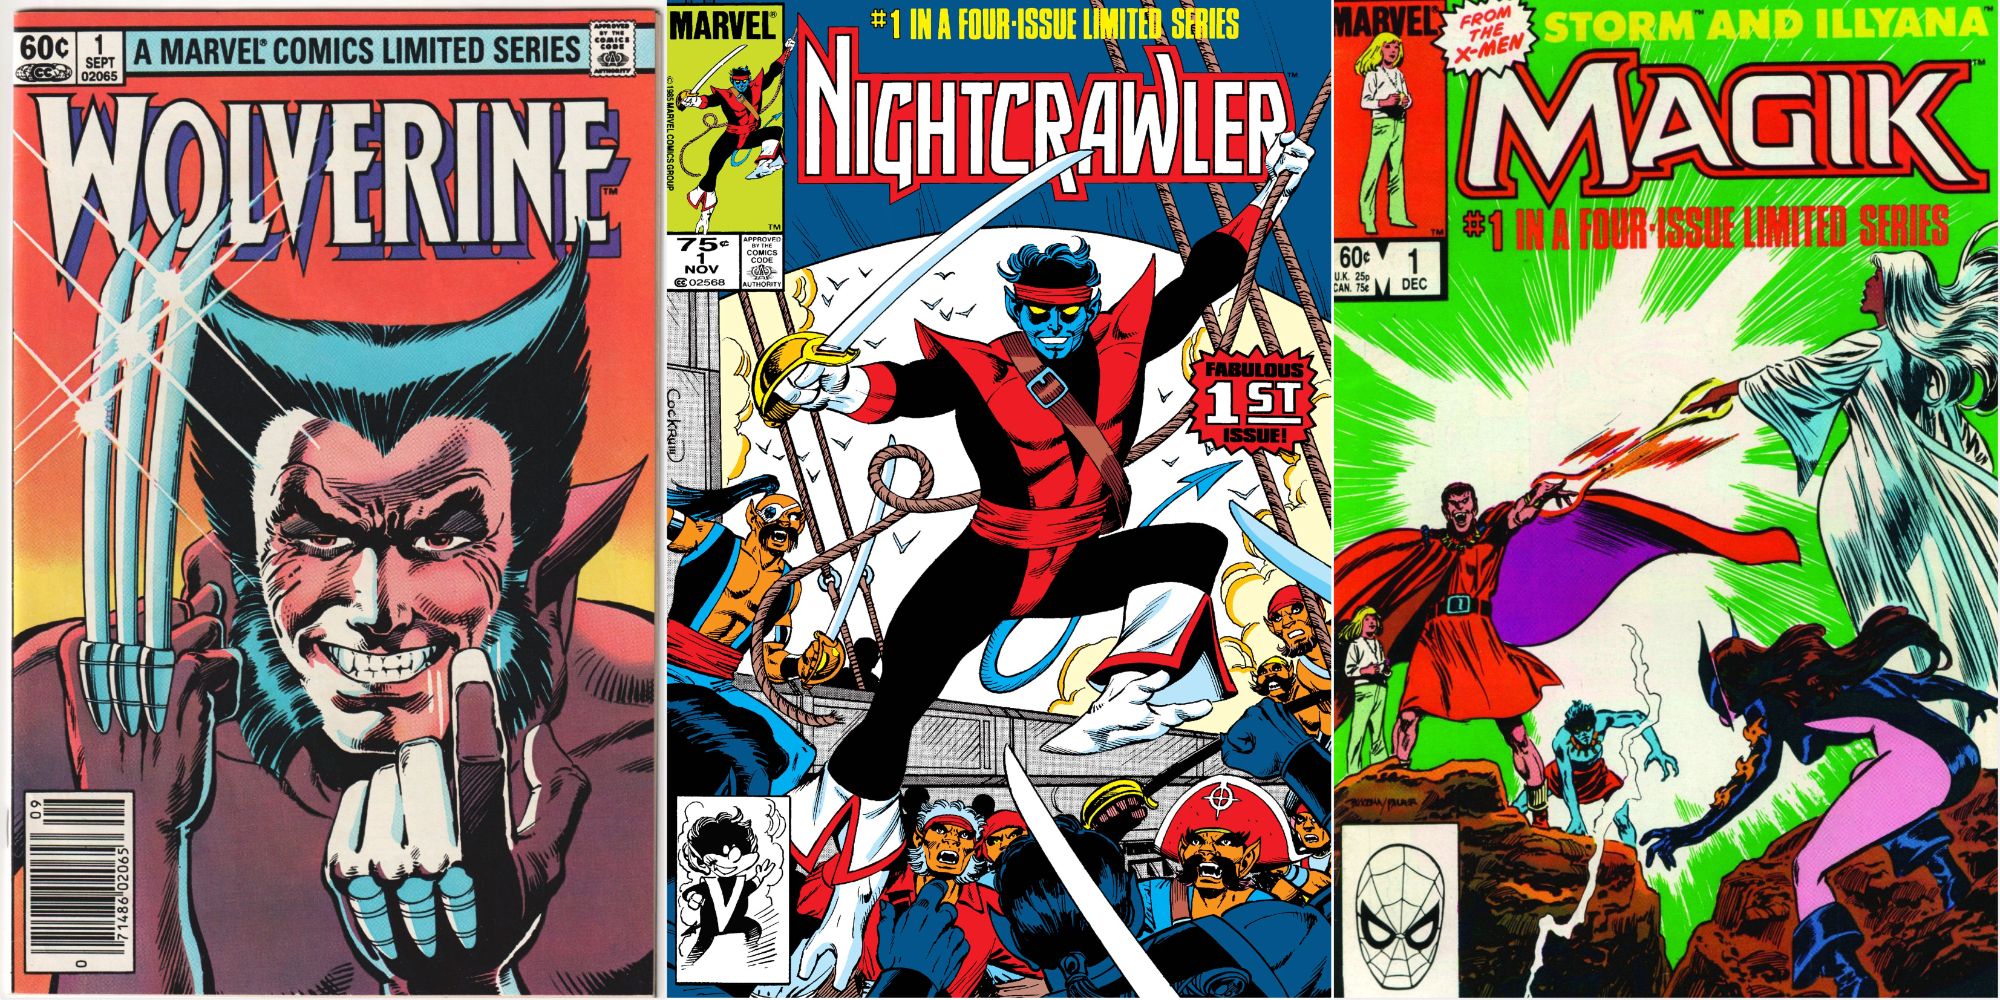 Wolverine #1, Nightcrawler #1, and Magik